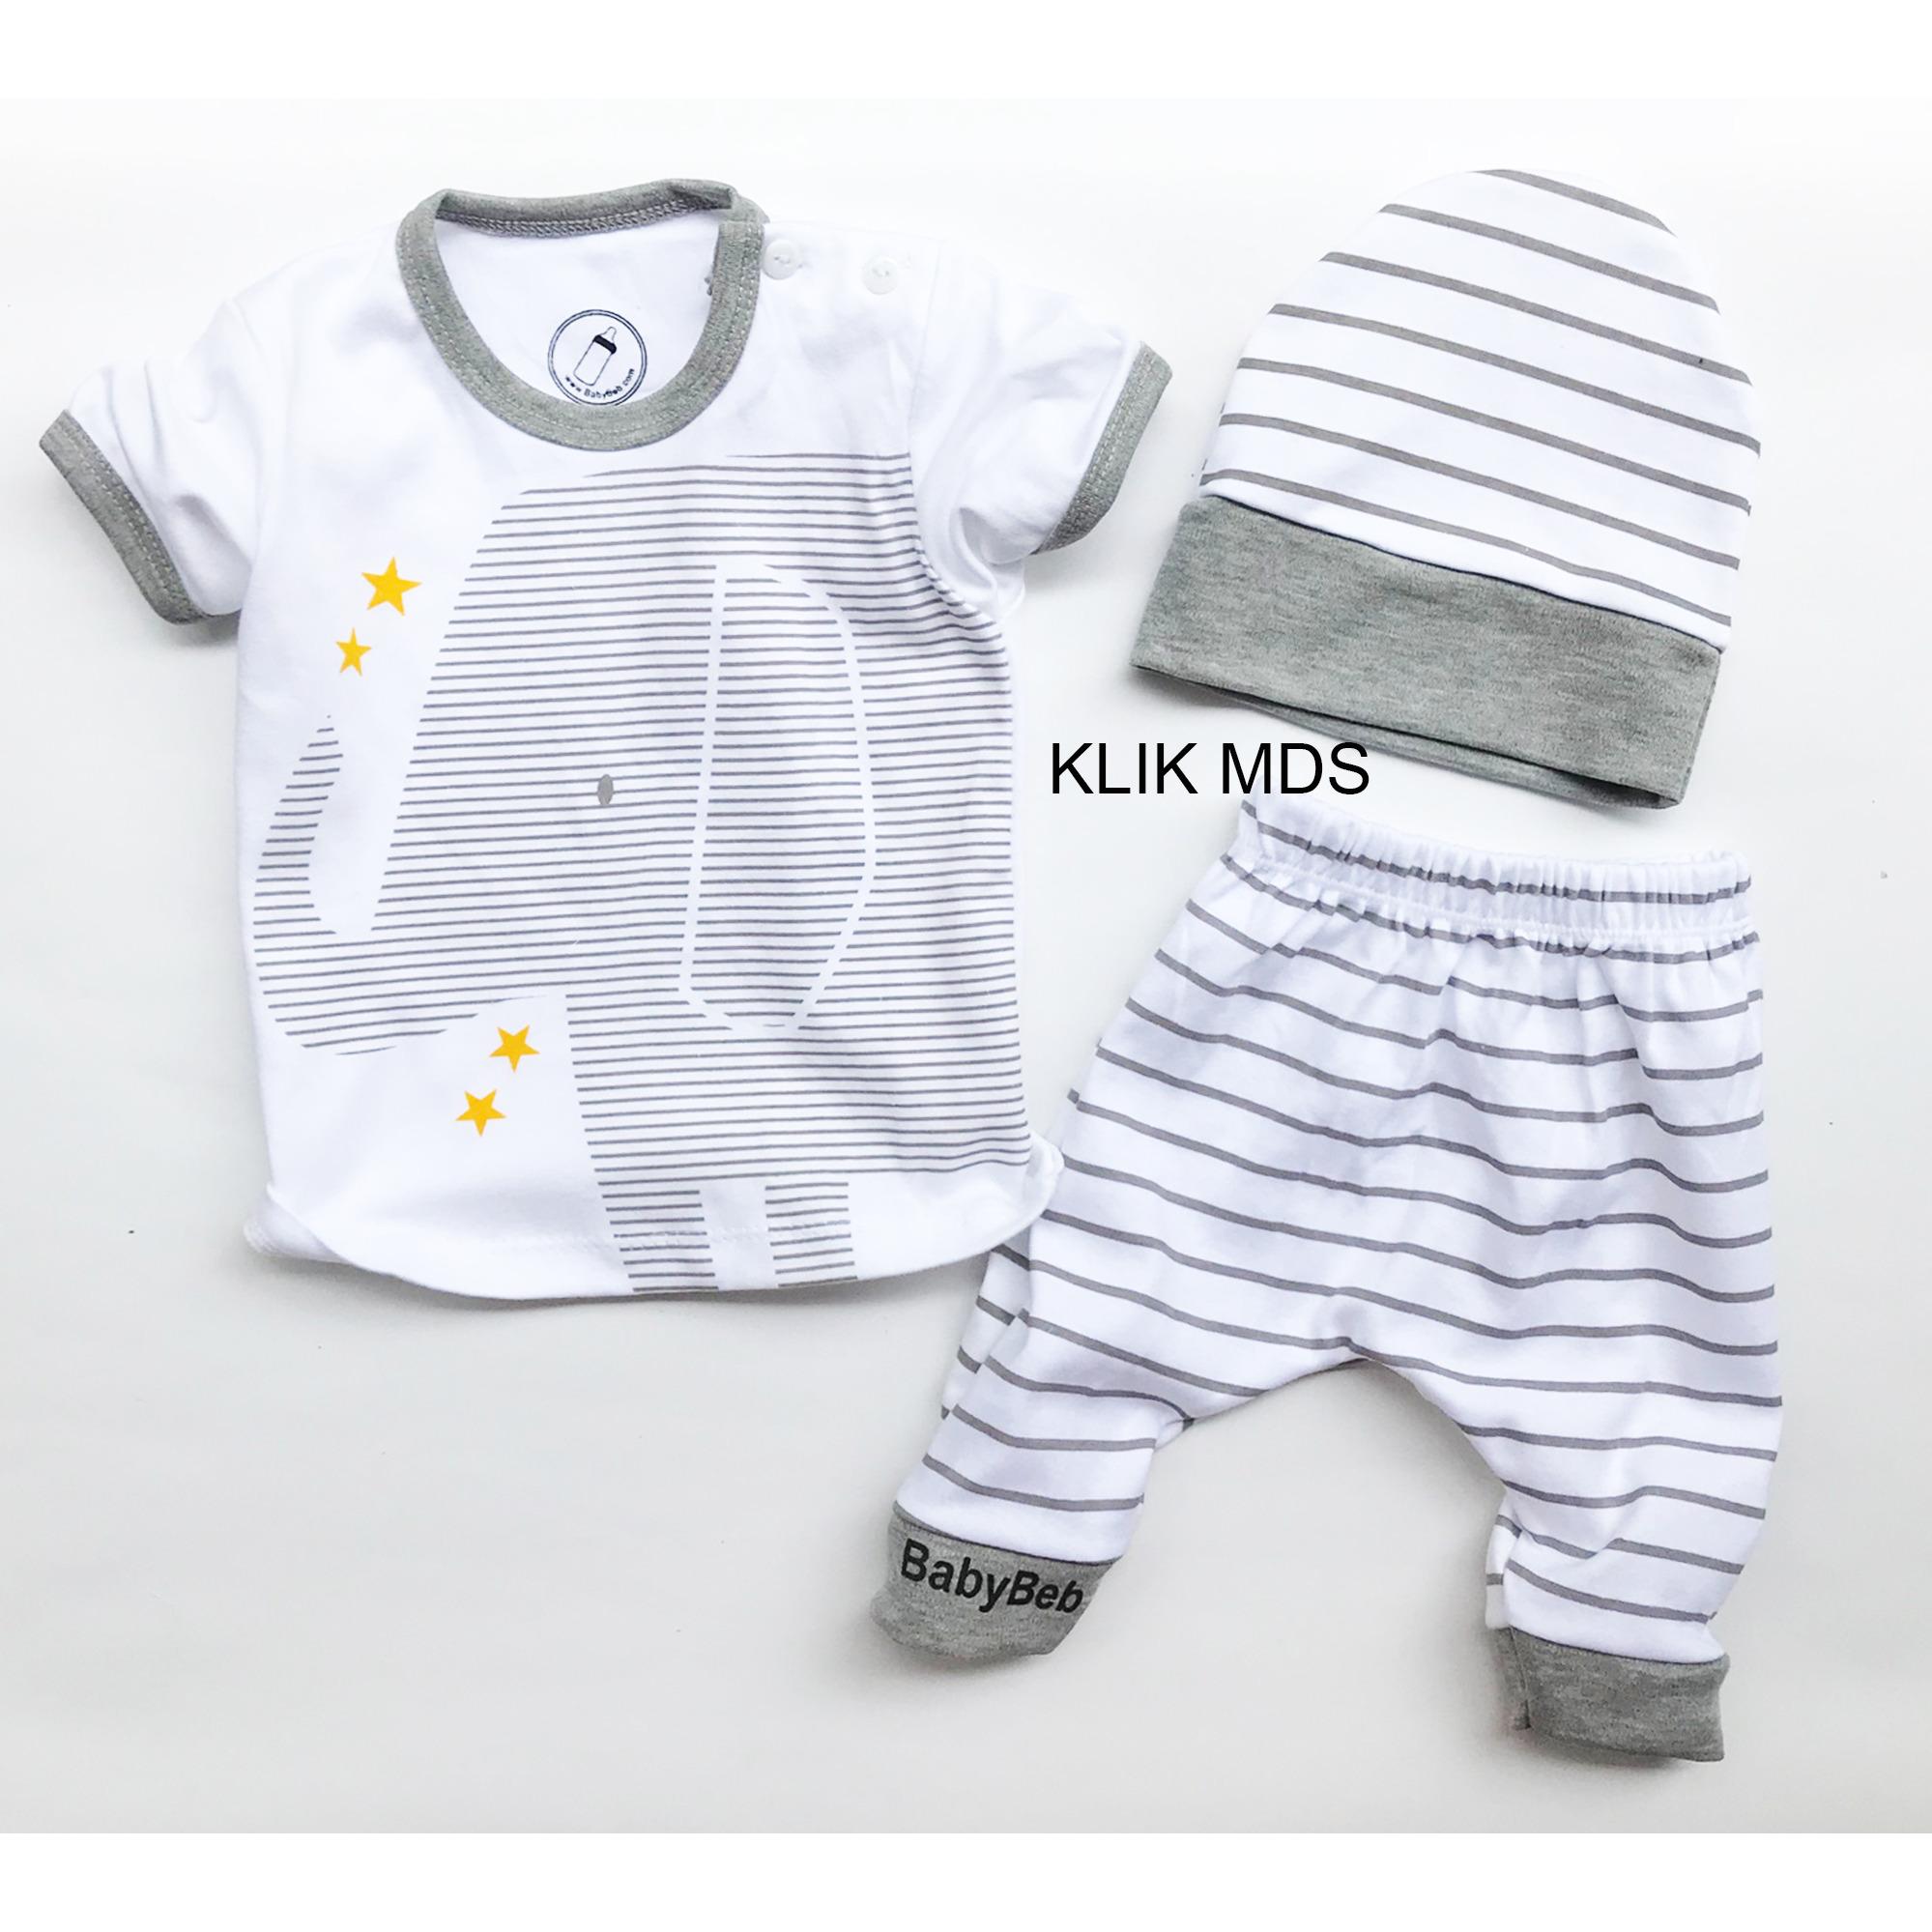 Pakaian Baju Bayi Laki Laki Lazadacoid